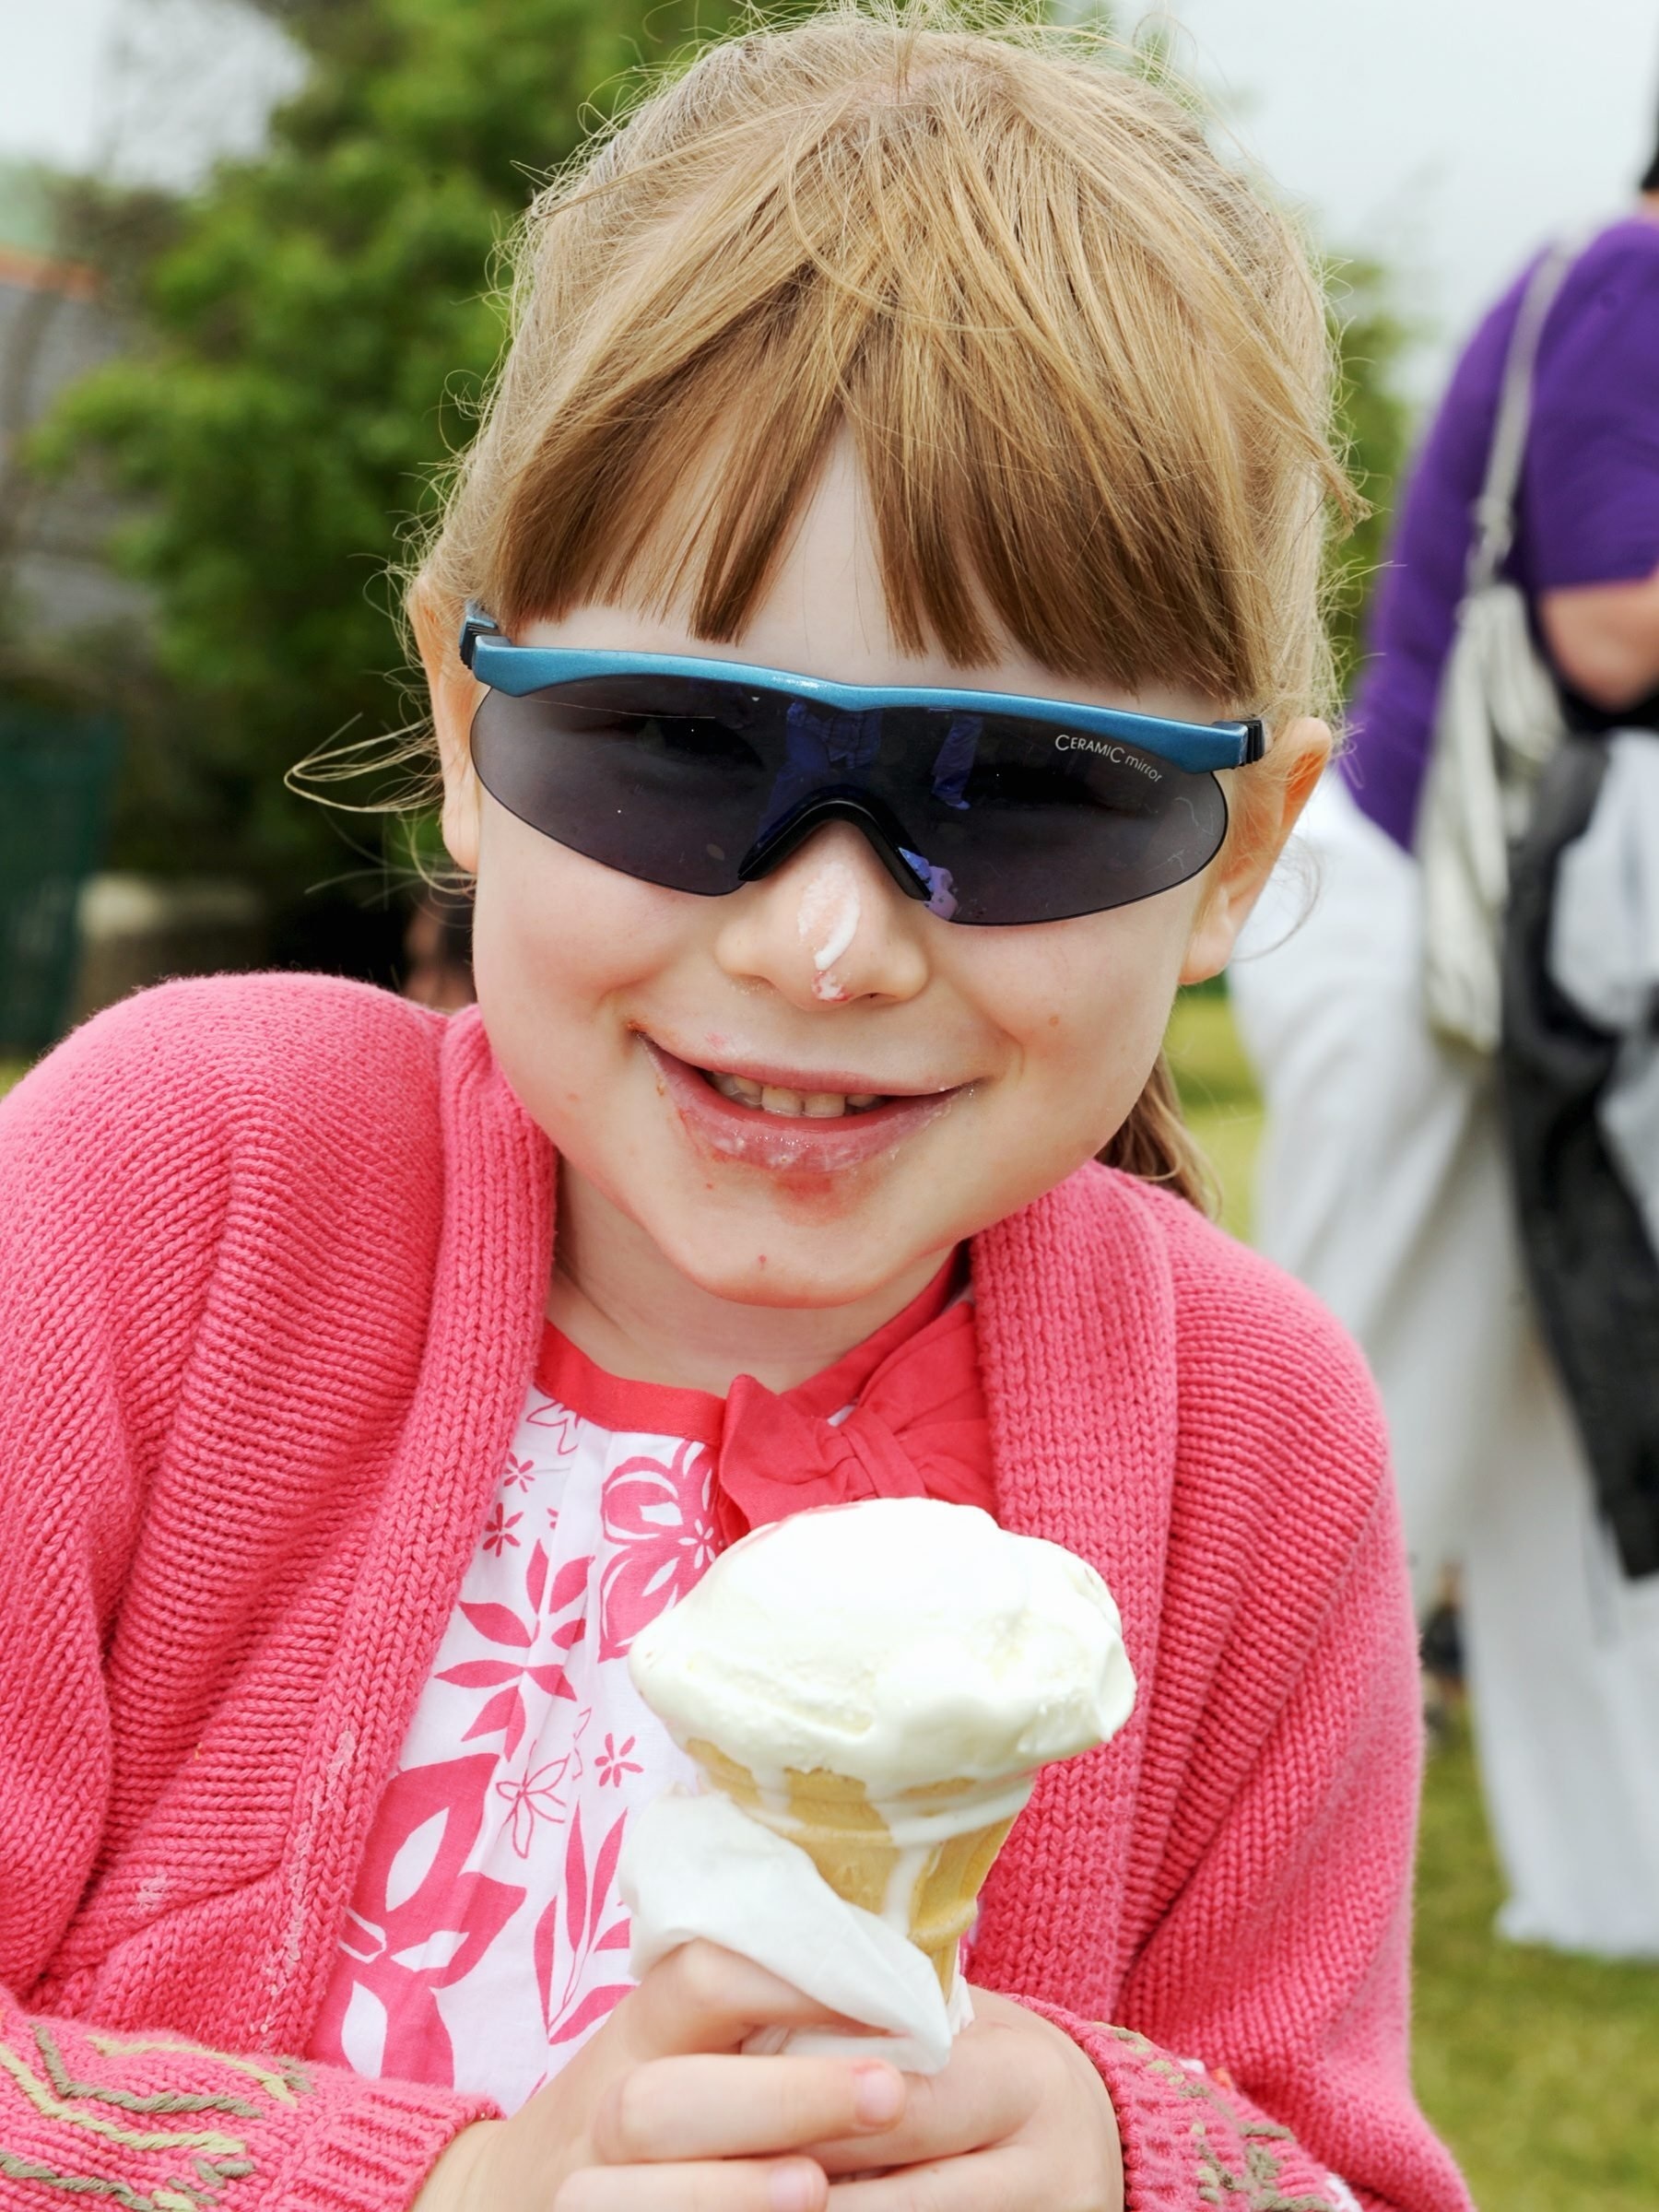  Hannah Clarkson enjoys an ice cream at the St Bees Carnival in summer 2009